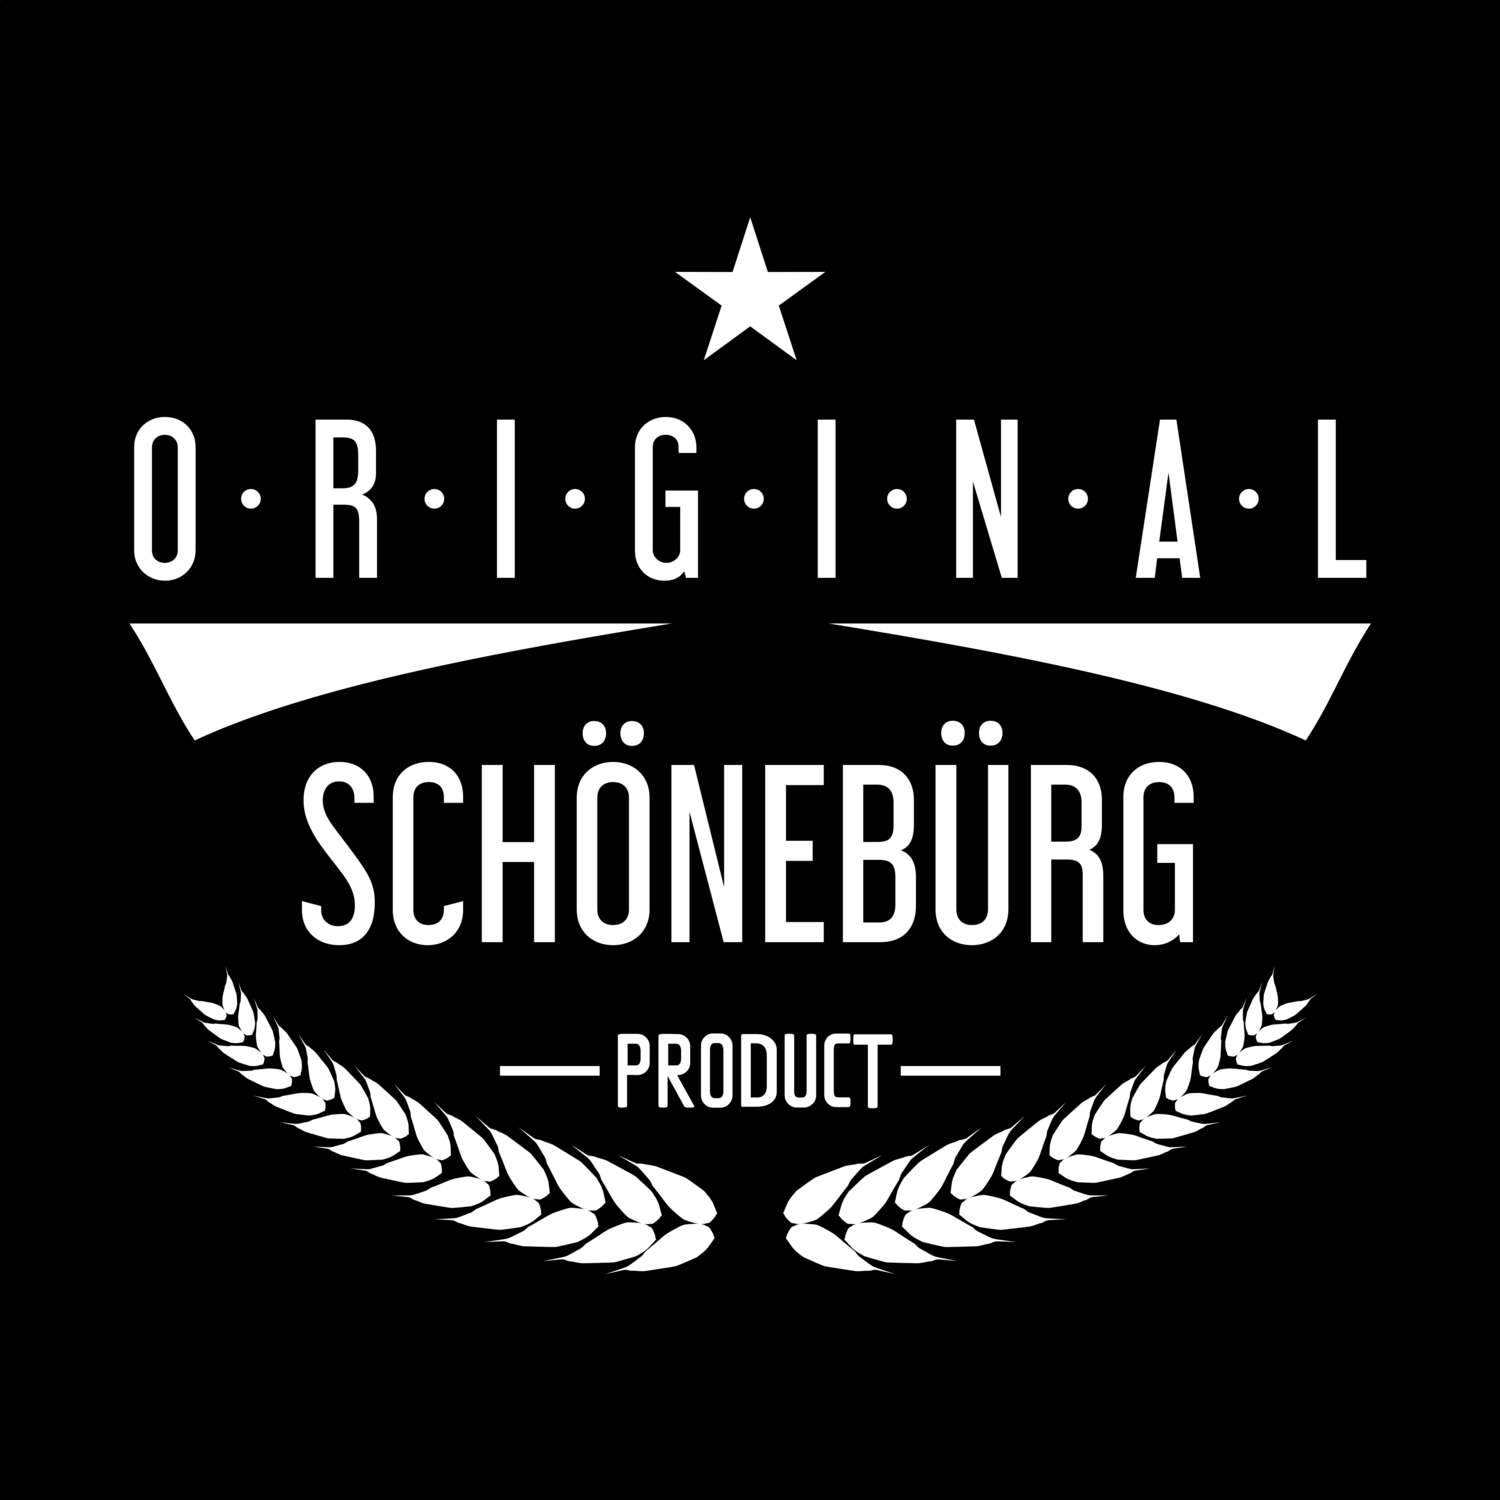 Schönebürg T-Shirt »Original Product«